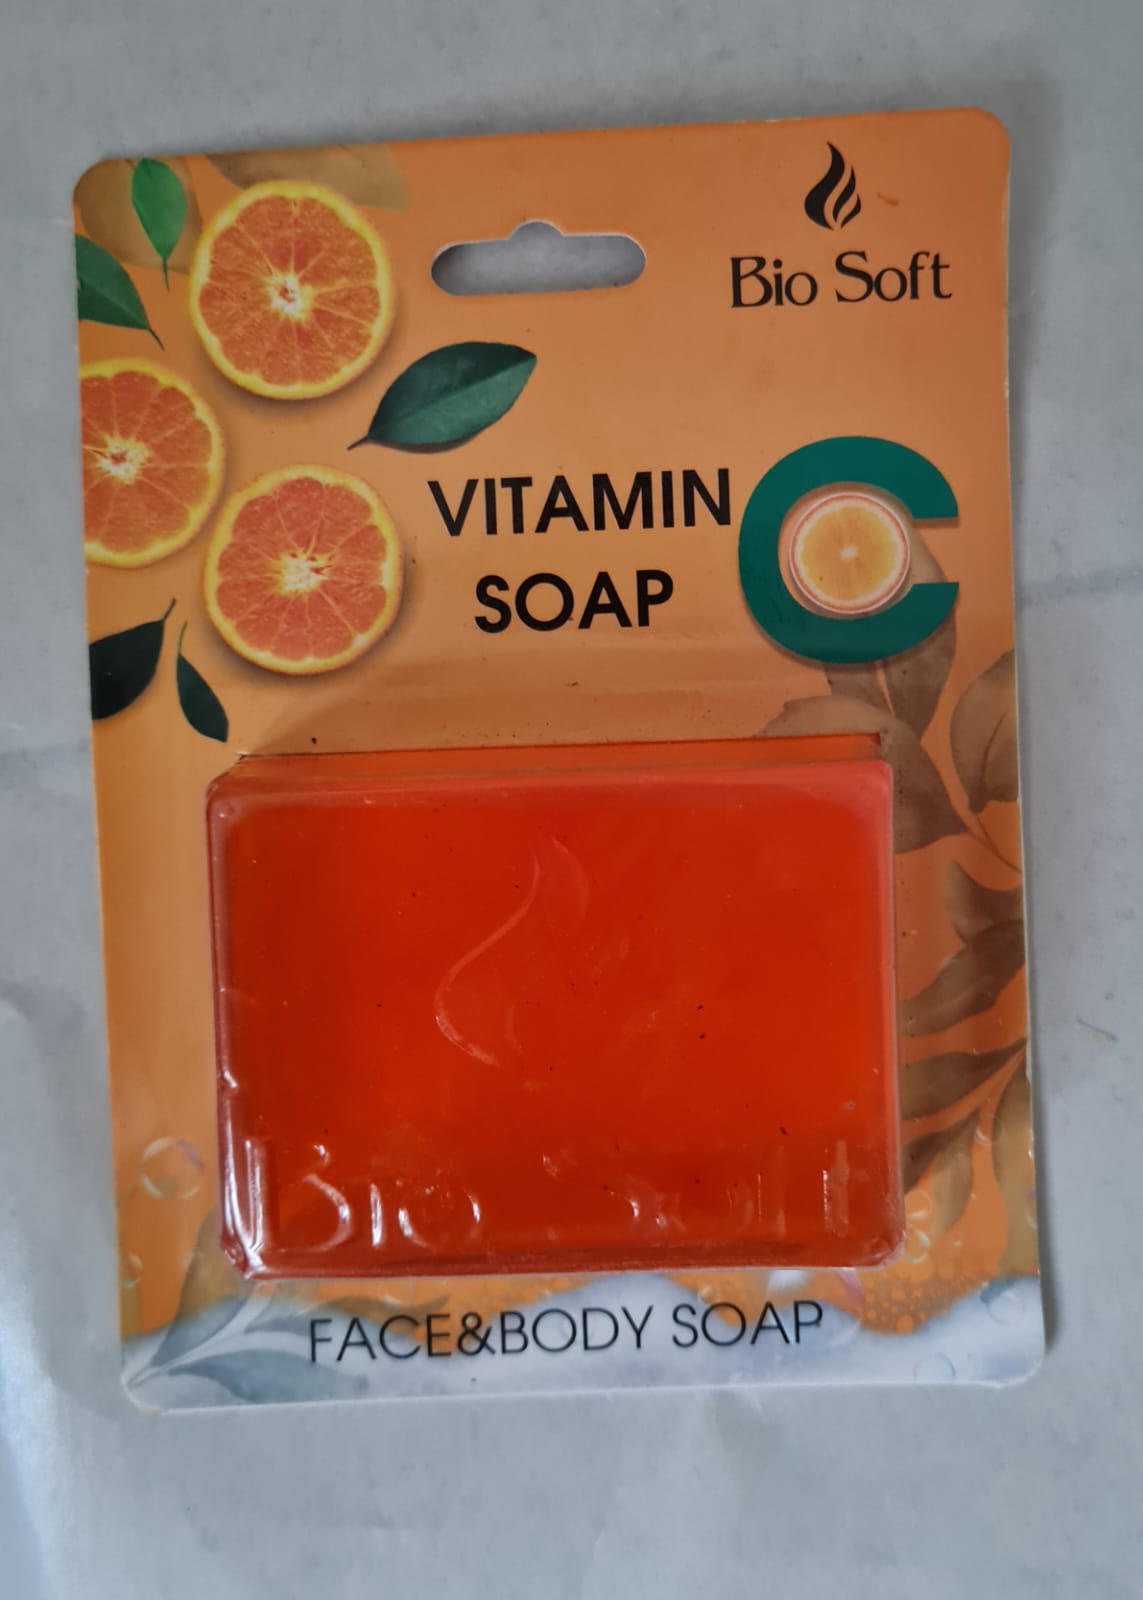 Vitamin C soap